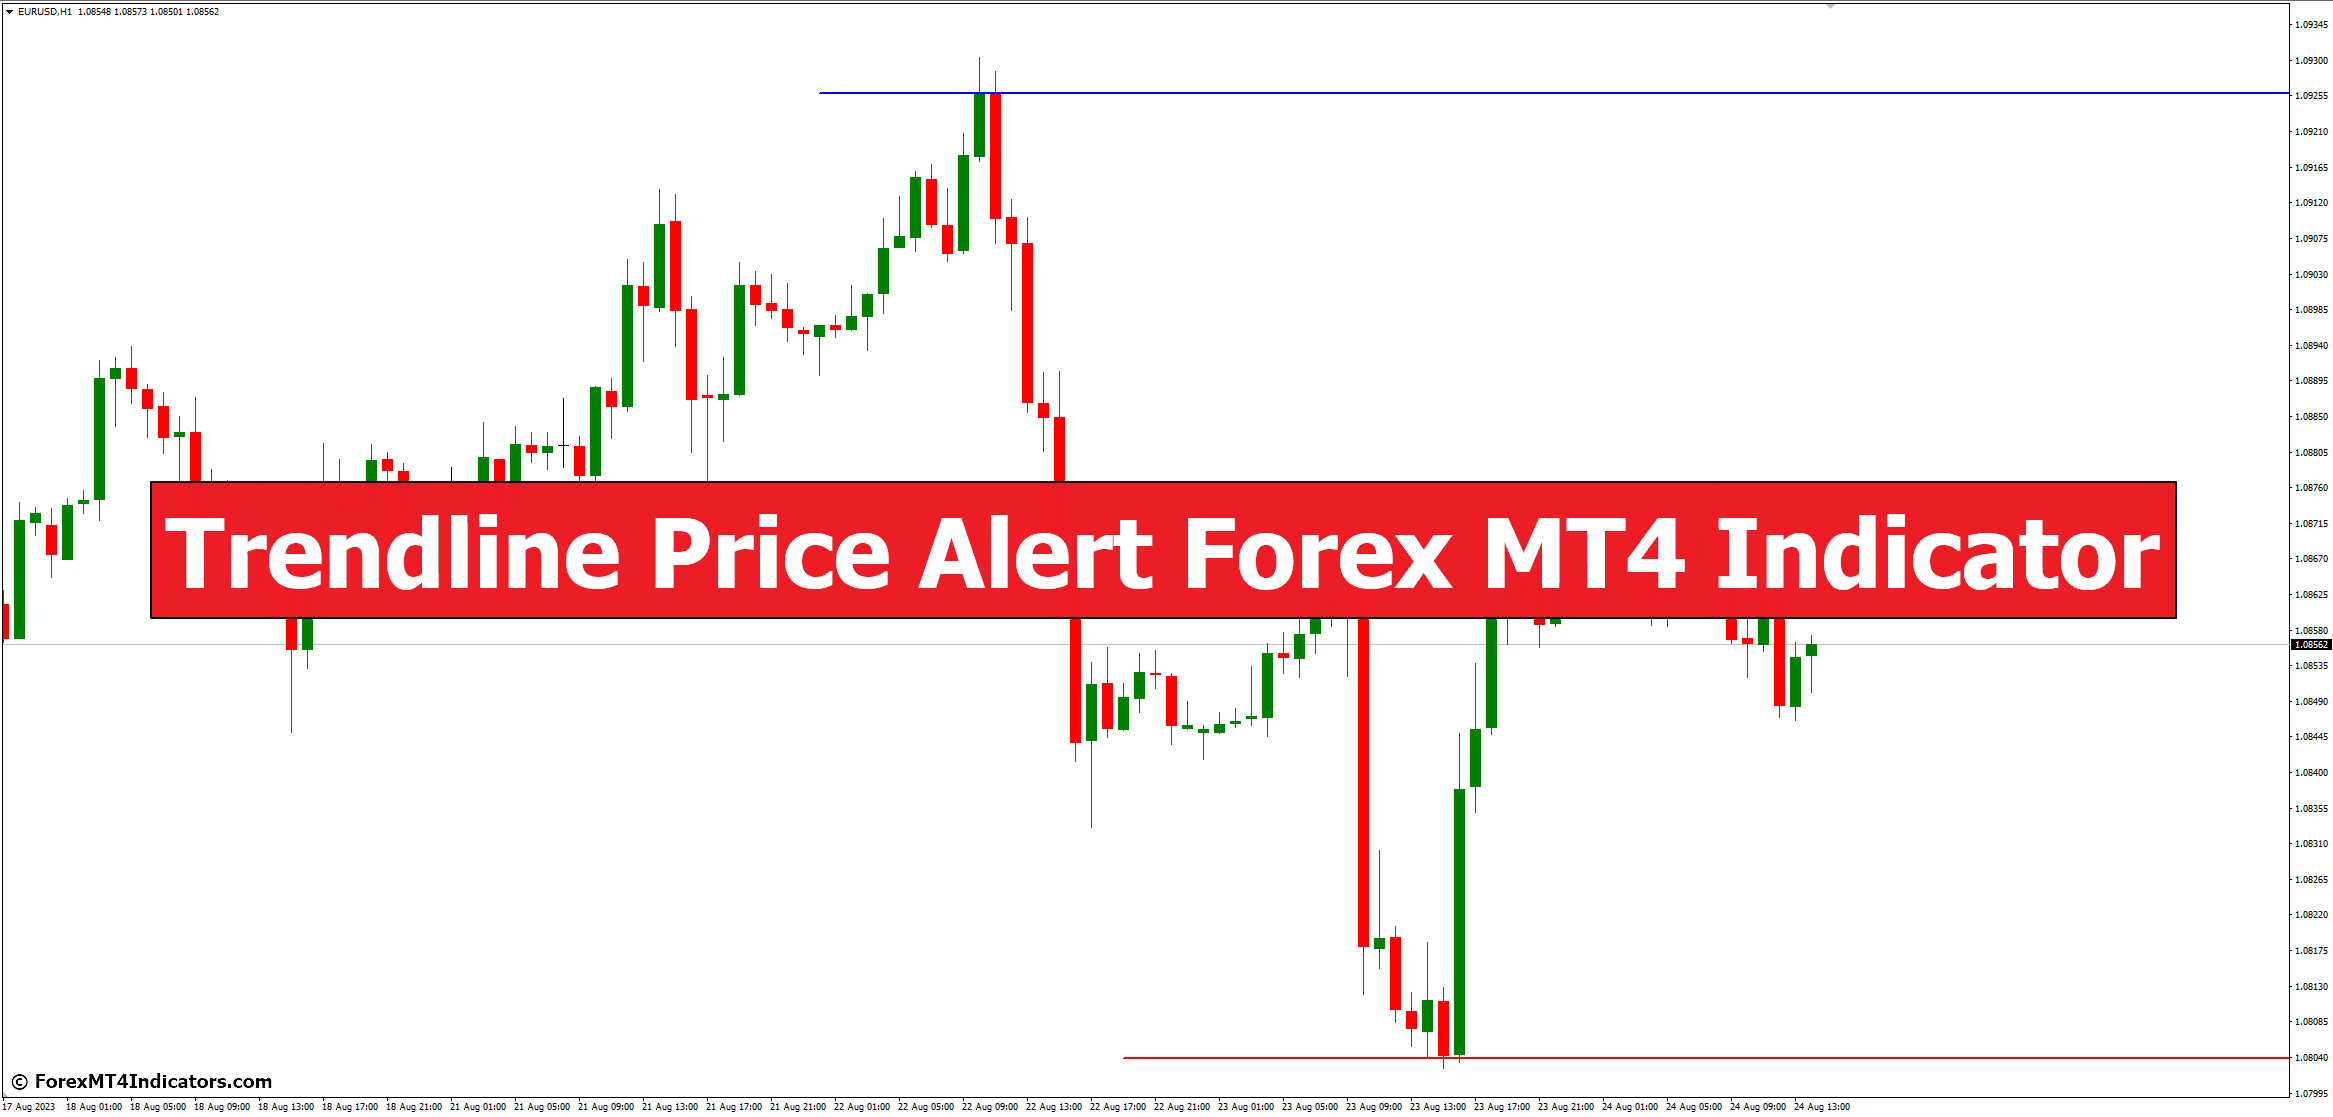 Trendline Price Alert Forex MT4 Indicator